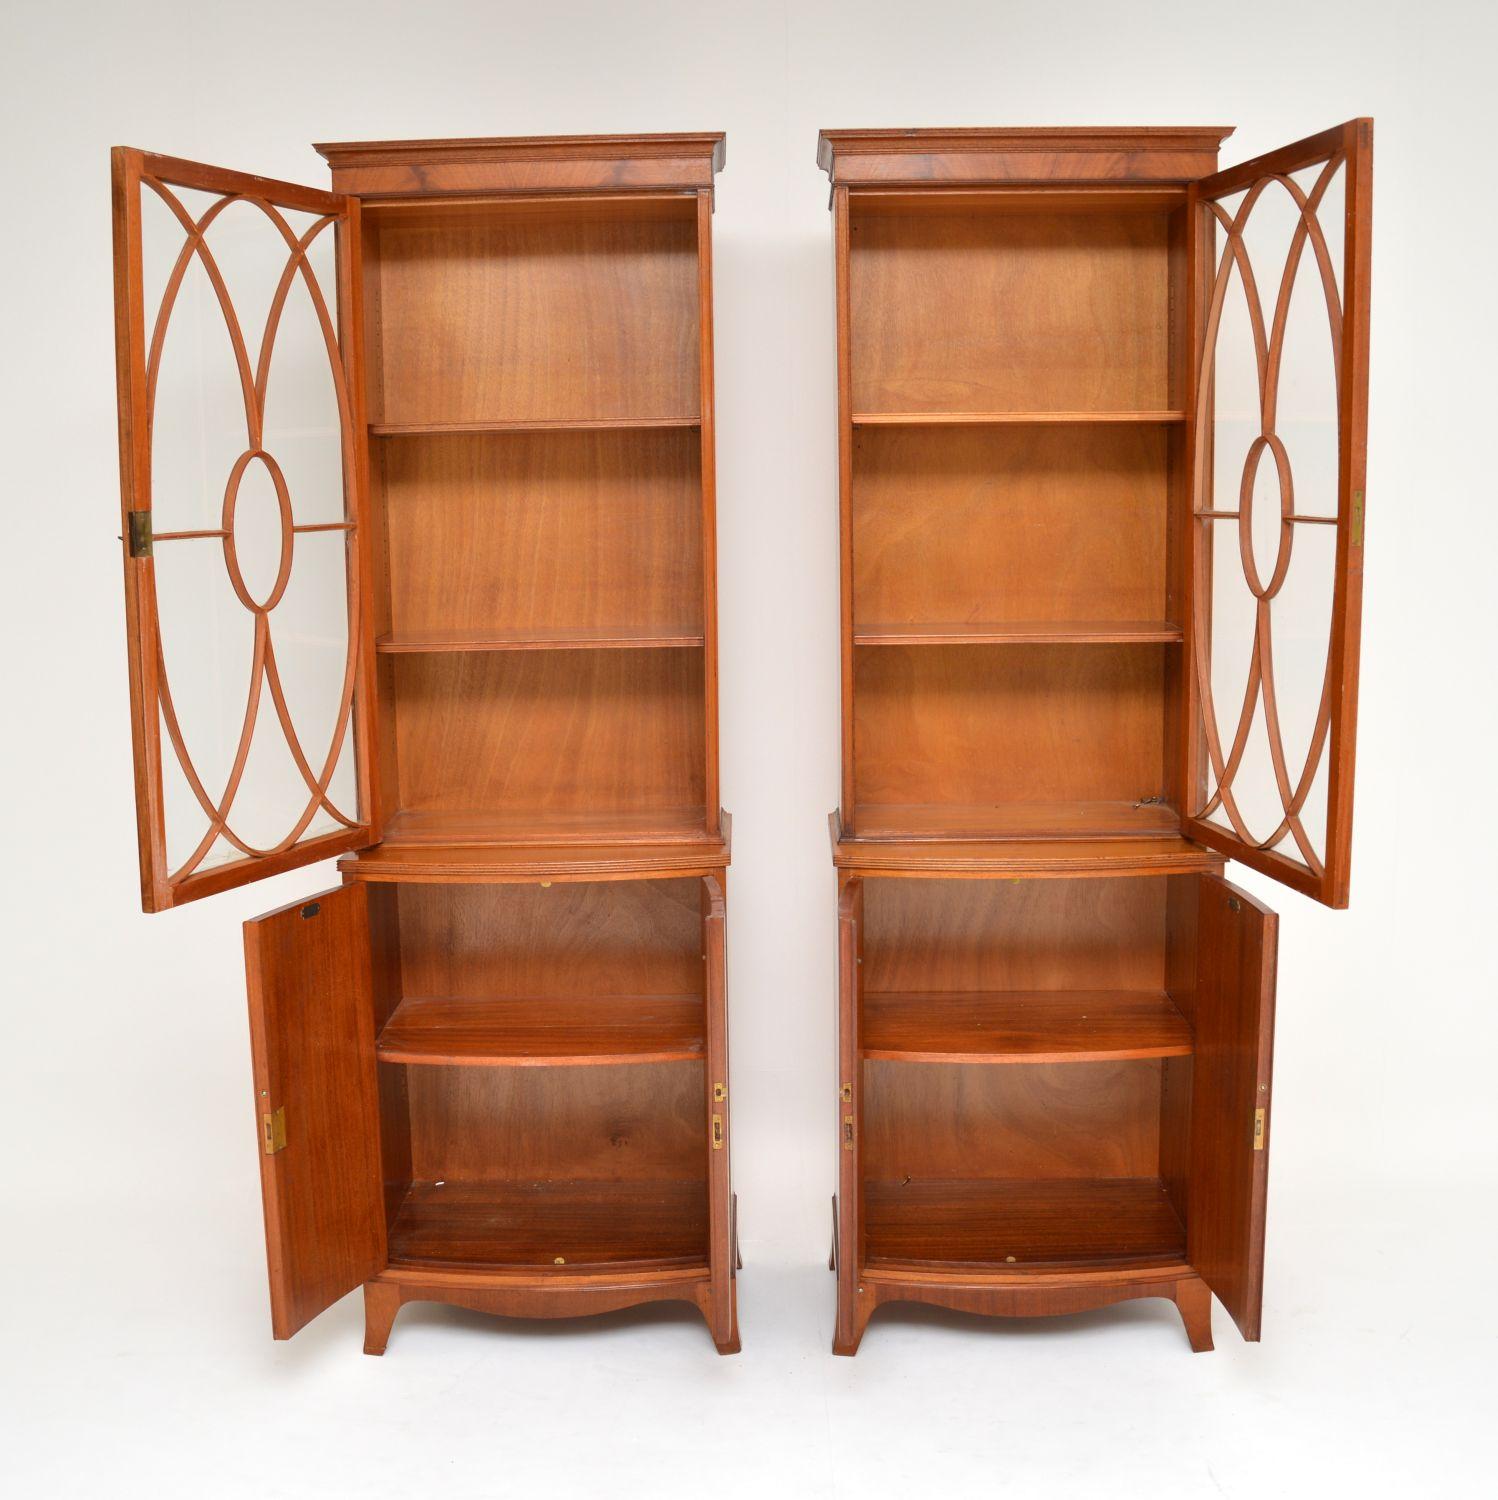 Sheraton Pair of Antique Mahogany Waring and Gillows Bookcases